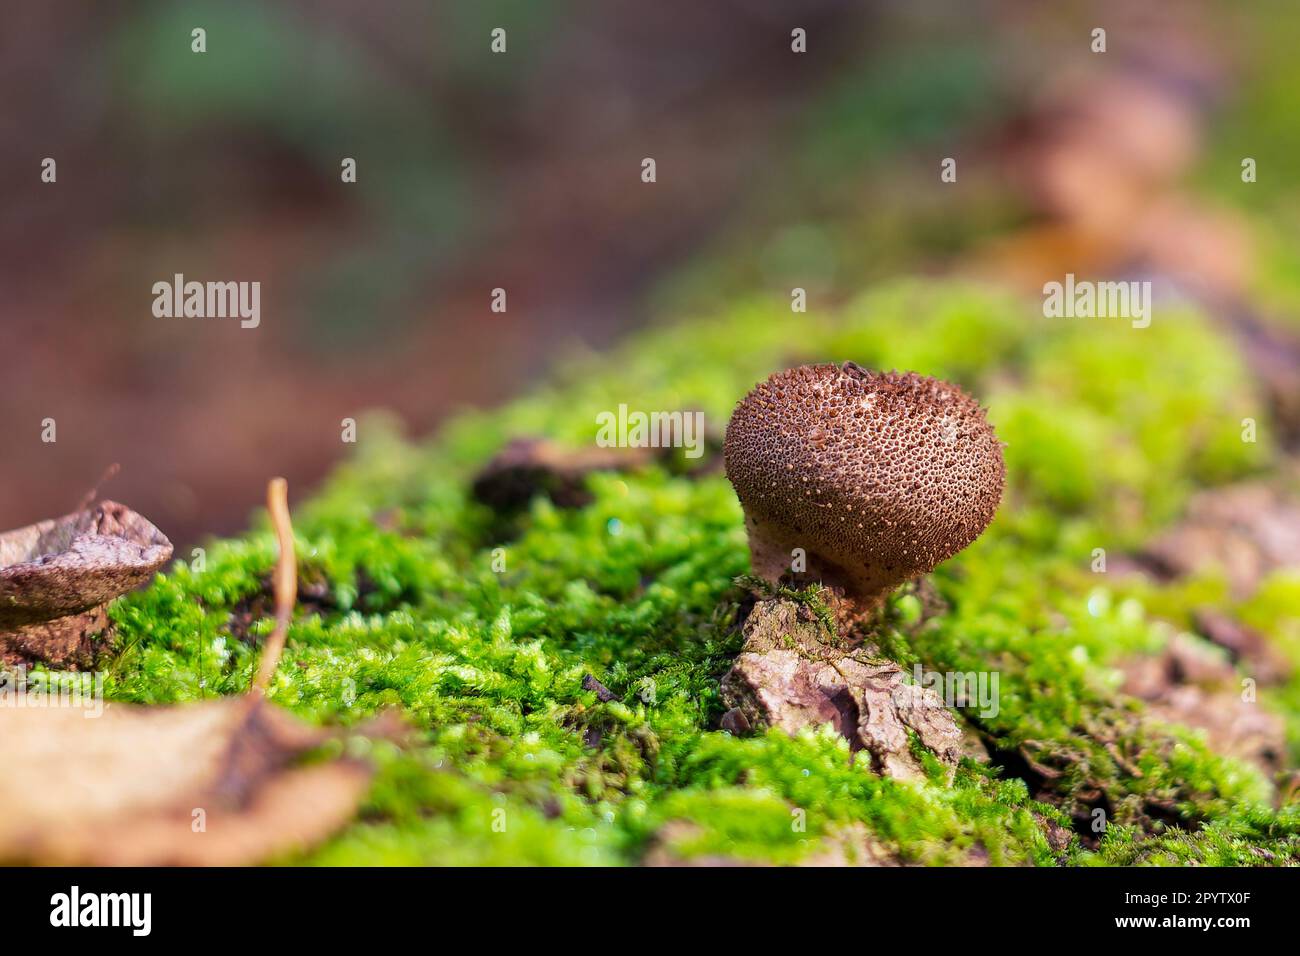 Mushroom Lycoperdon puffbal grows among bright green moss Stock Photo